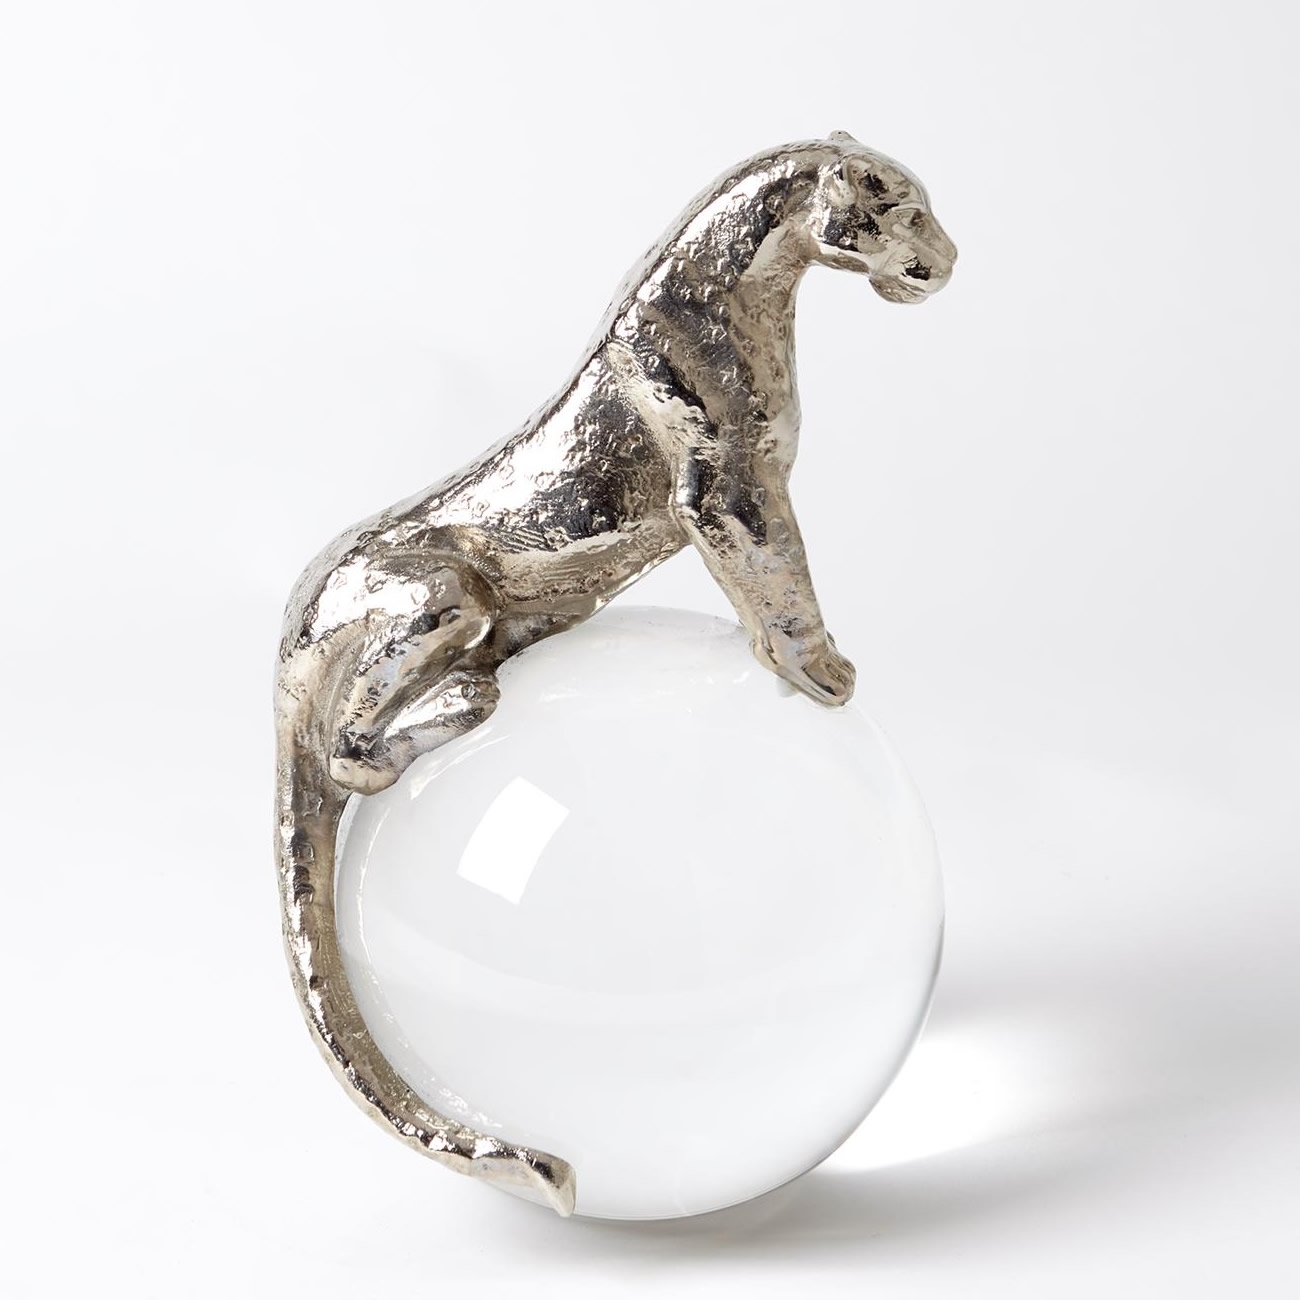 Jaguar on Crystal Ball Sculpture Nickel